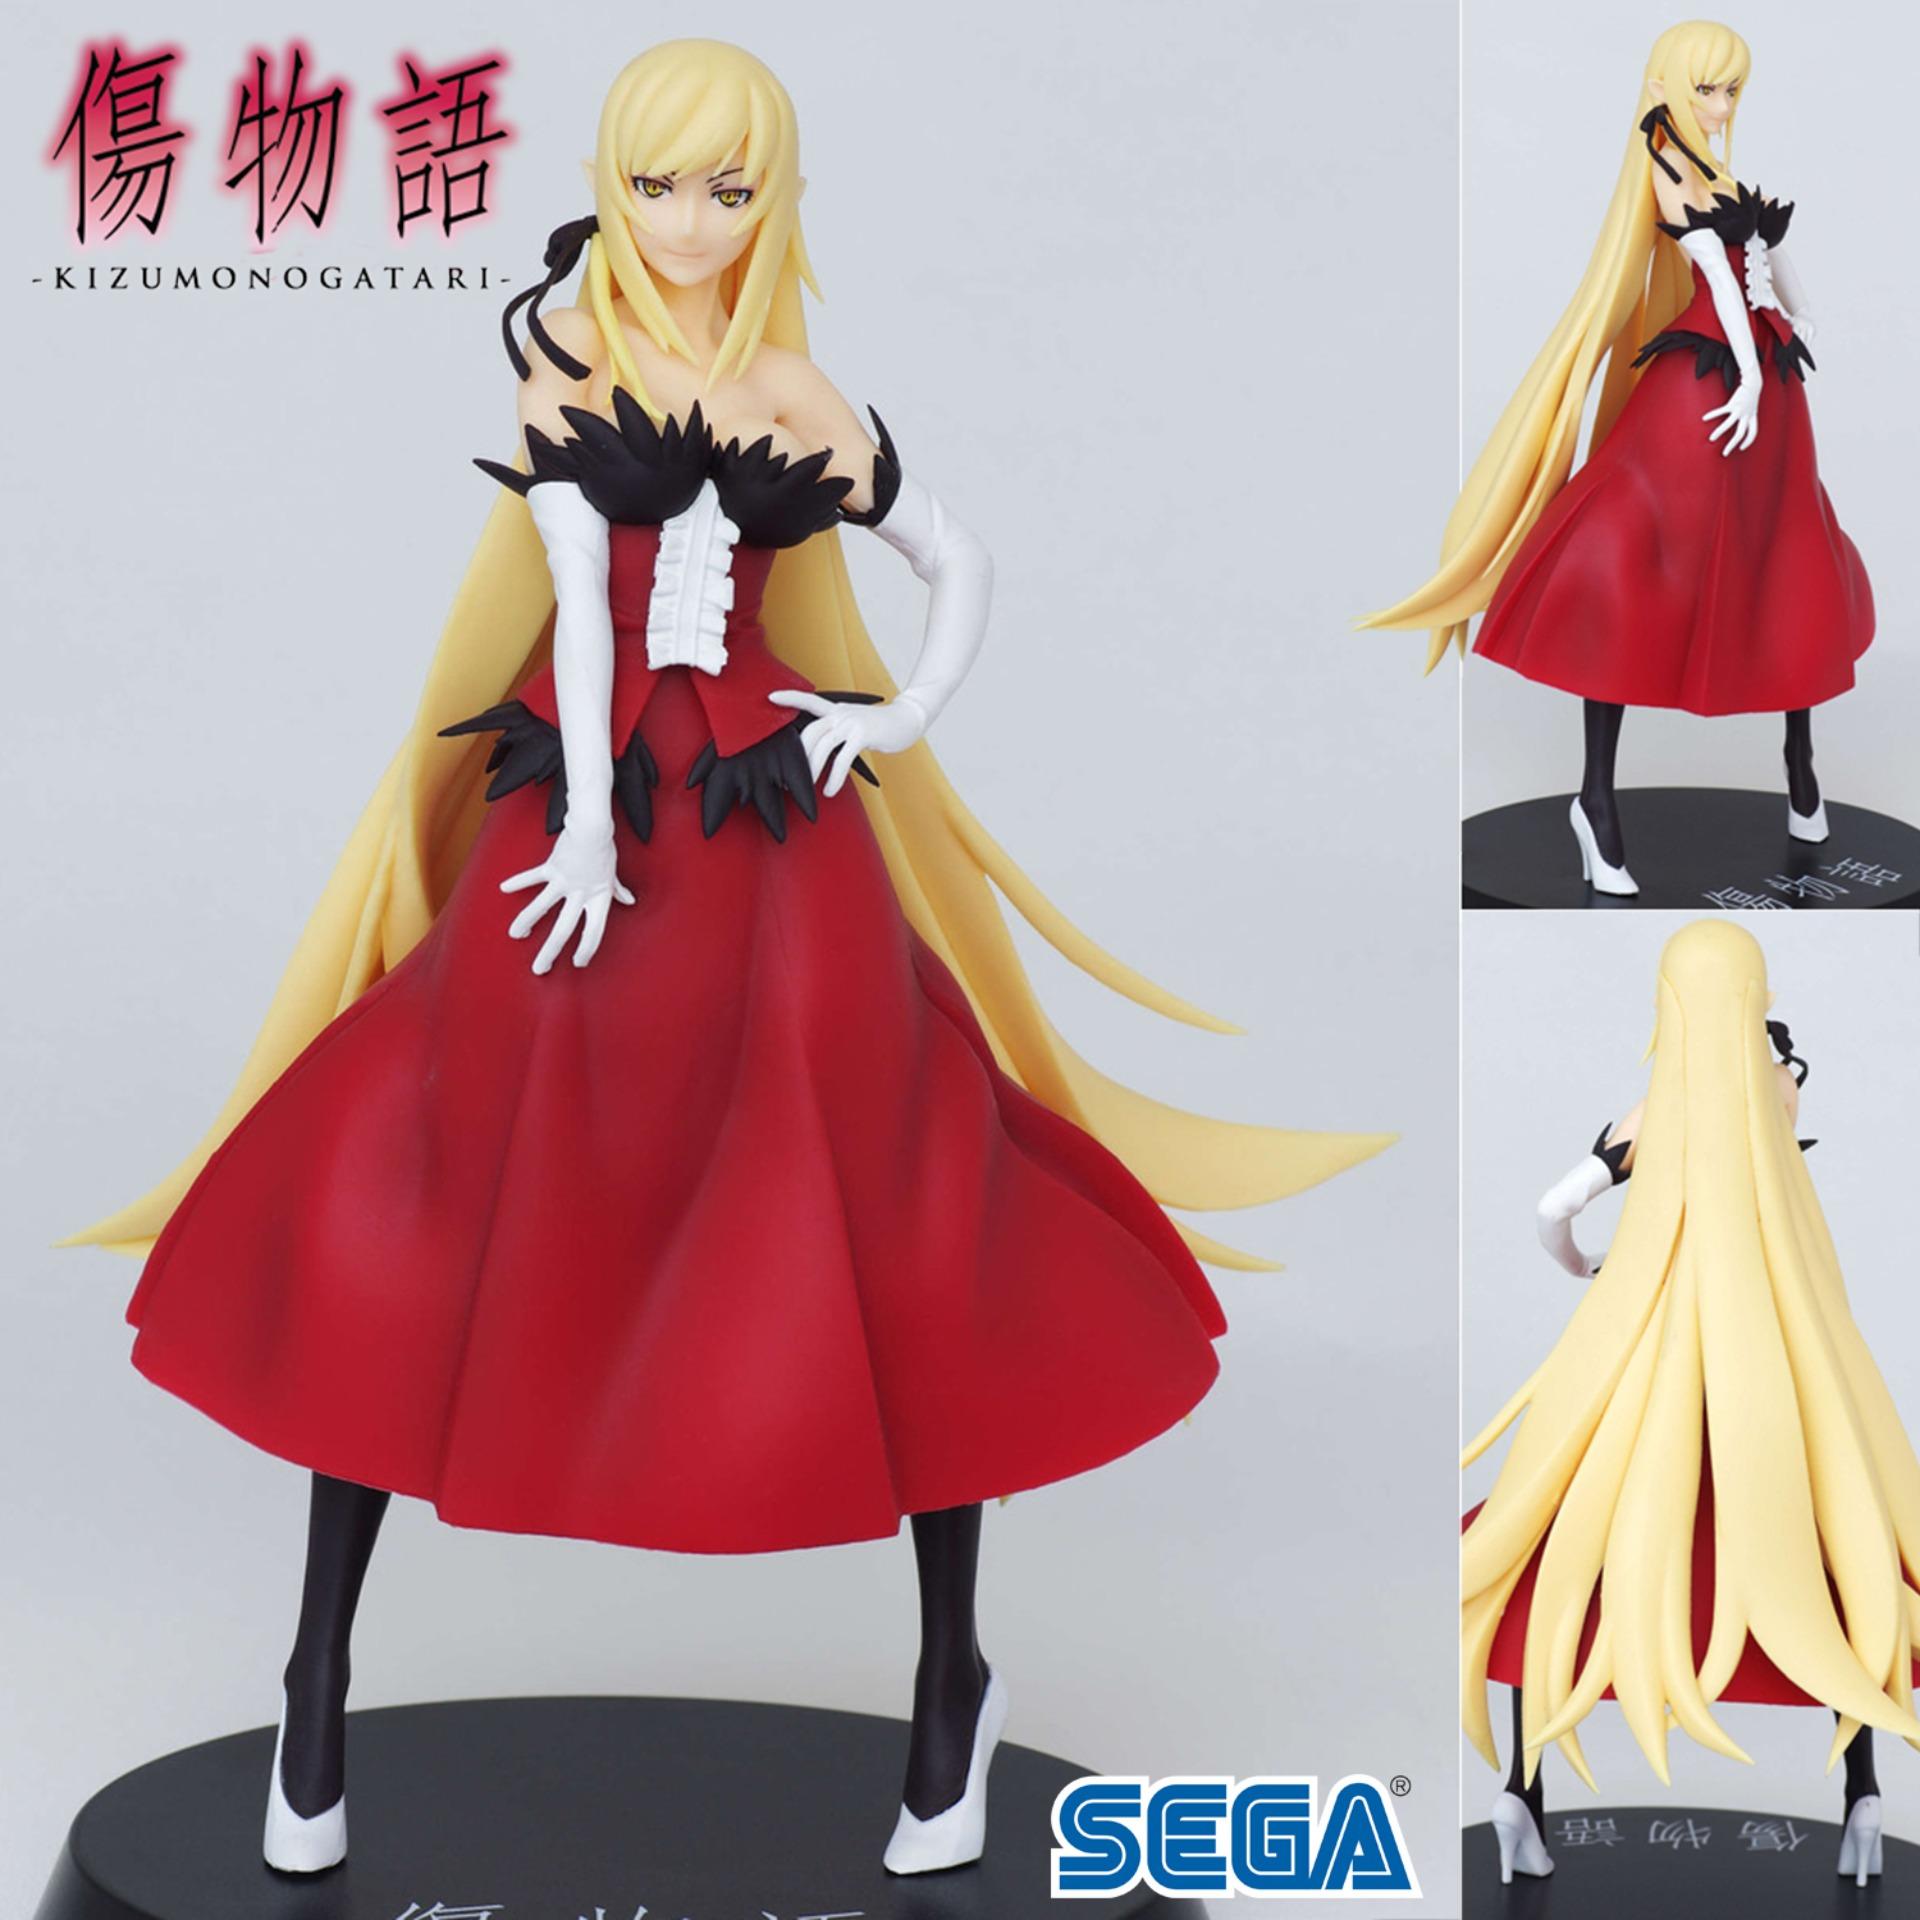 Model โมเดล งานแท้ 100% Sega จาก Kizumonogatari ปกรณัมของตำหนิ Kiss Shot Acerola Orion Heart Under Blade คิสช็อต อาเซโรล่าโอไรออน ฮาร์ตอันเดอร์เบลด Ver Figure ฟิกเกอร์ Anime อนิเมะ การ์ตูน มังงะ Doll ตุ๊กตา คอลเลกชัน สั่งและนำเข้าจากญี่ปุ่น manga